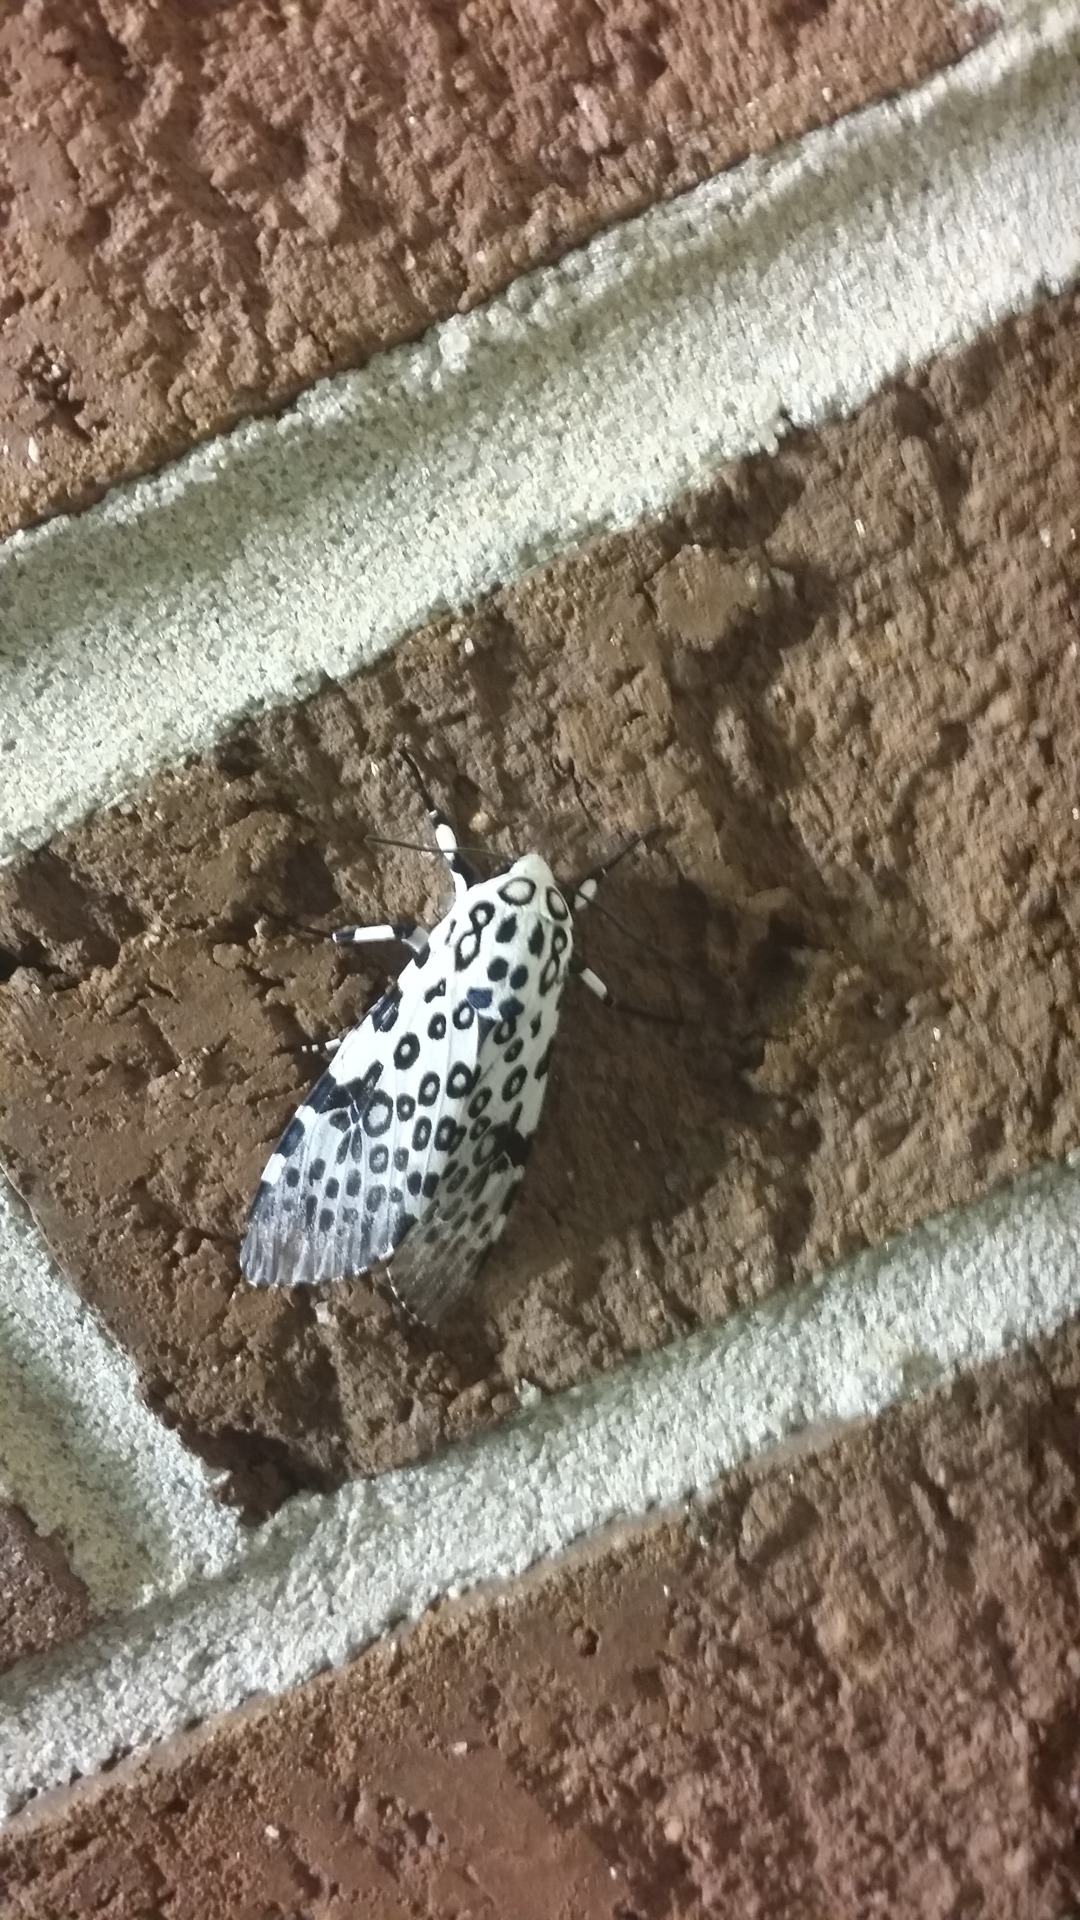 I saw the coolest moth.